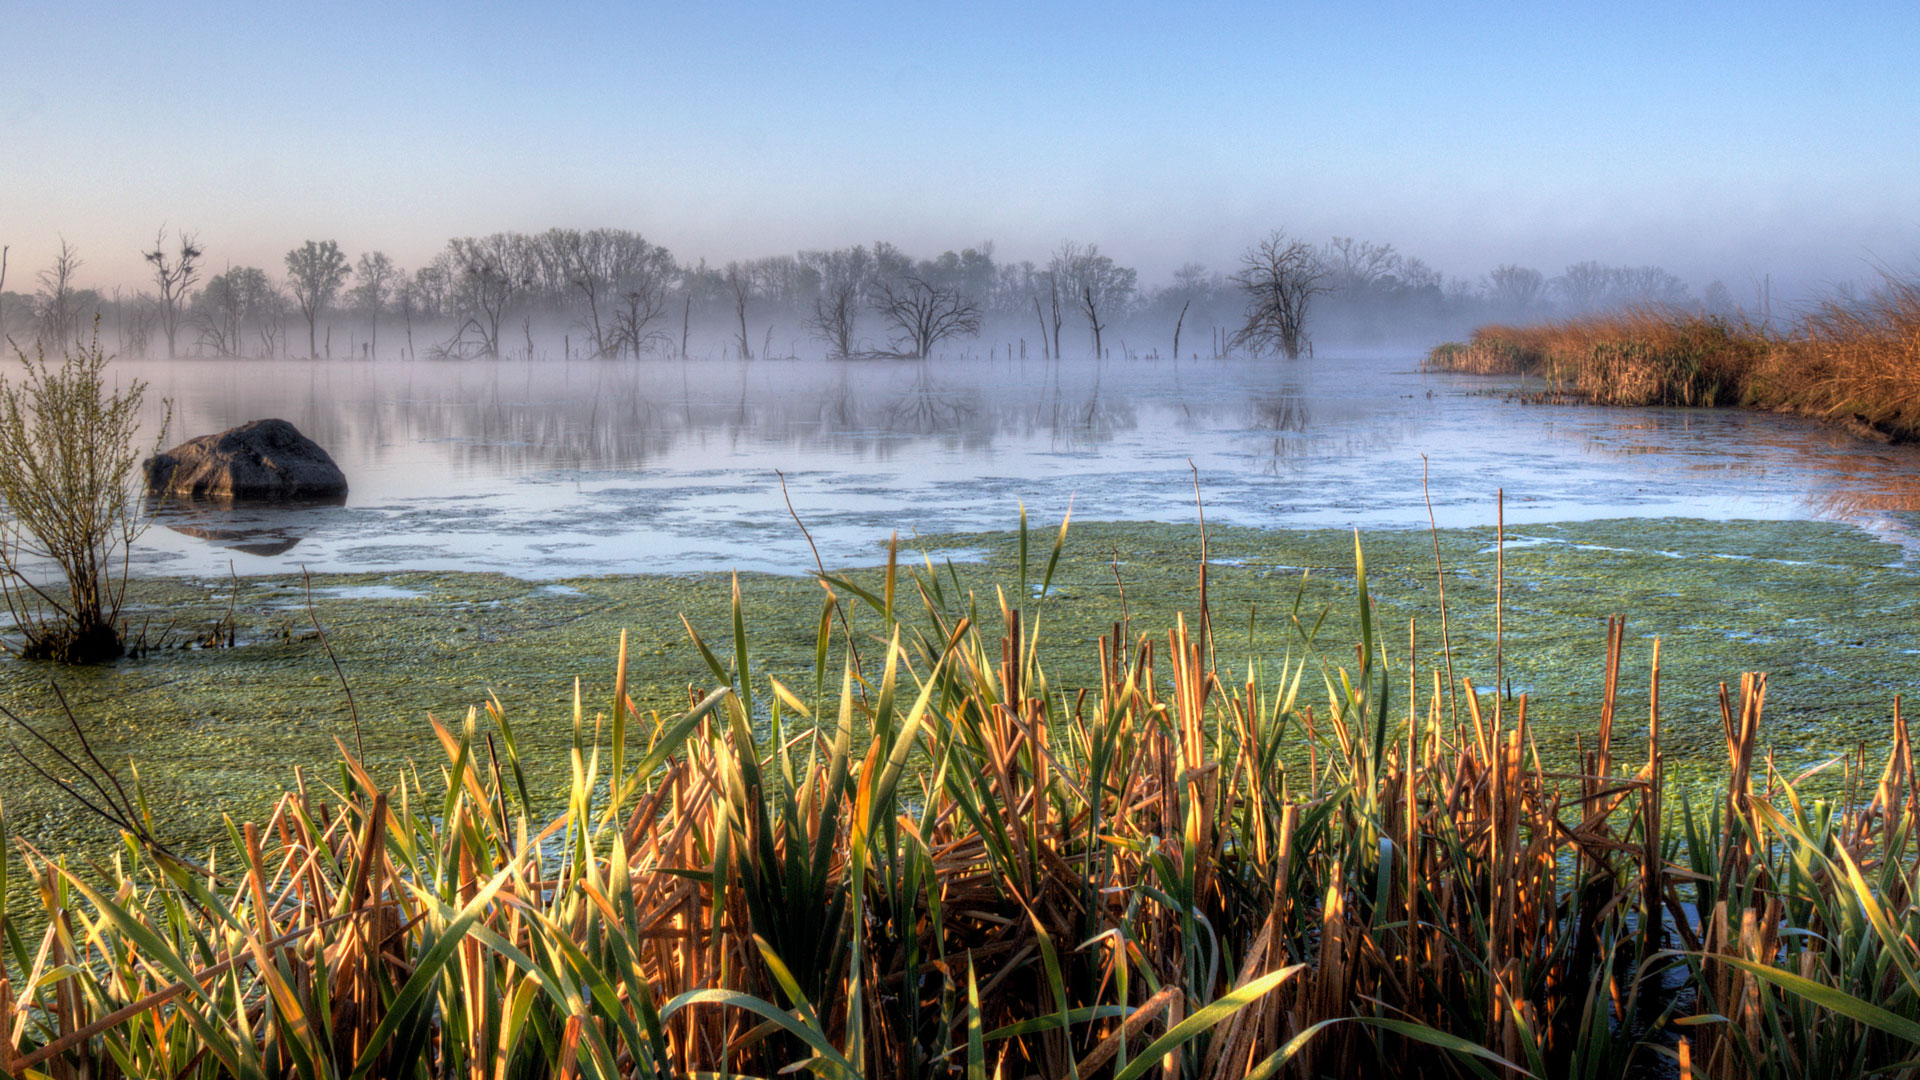 Foggy morning on Blue Wing Pond at Pickerington Ponds Metro Park